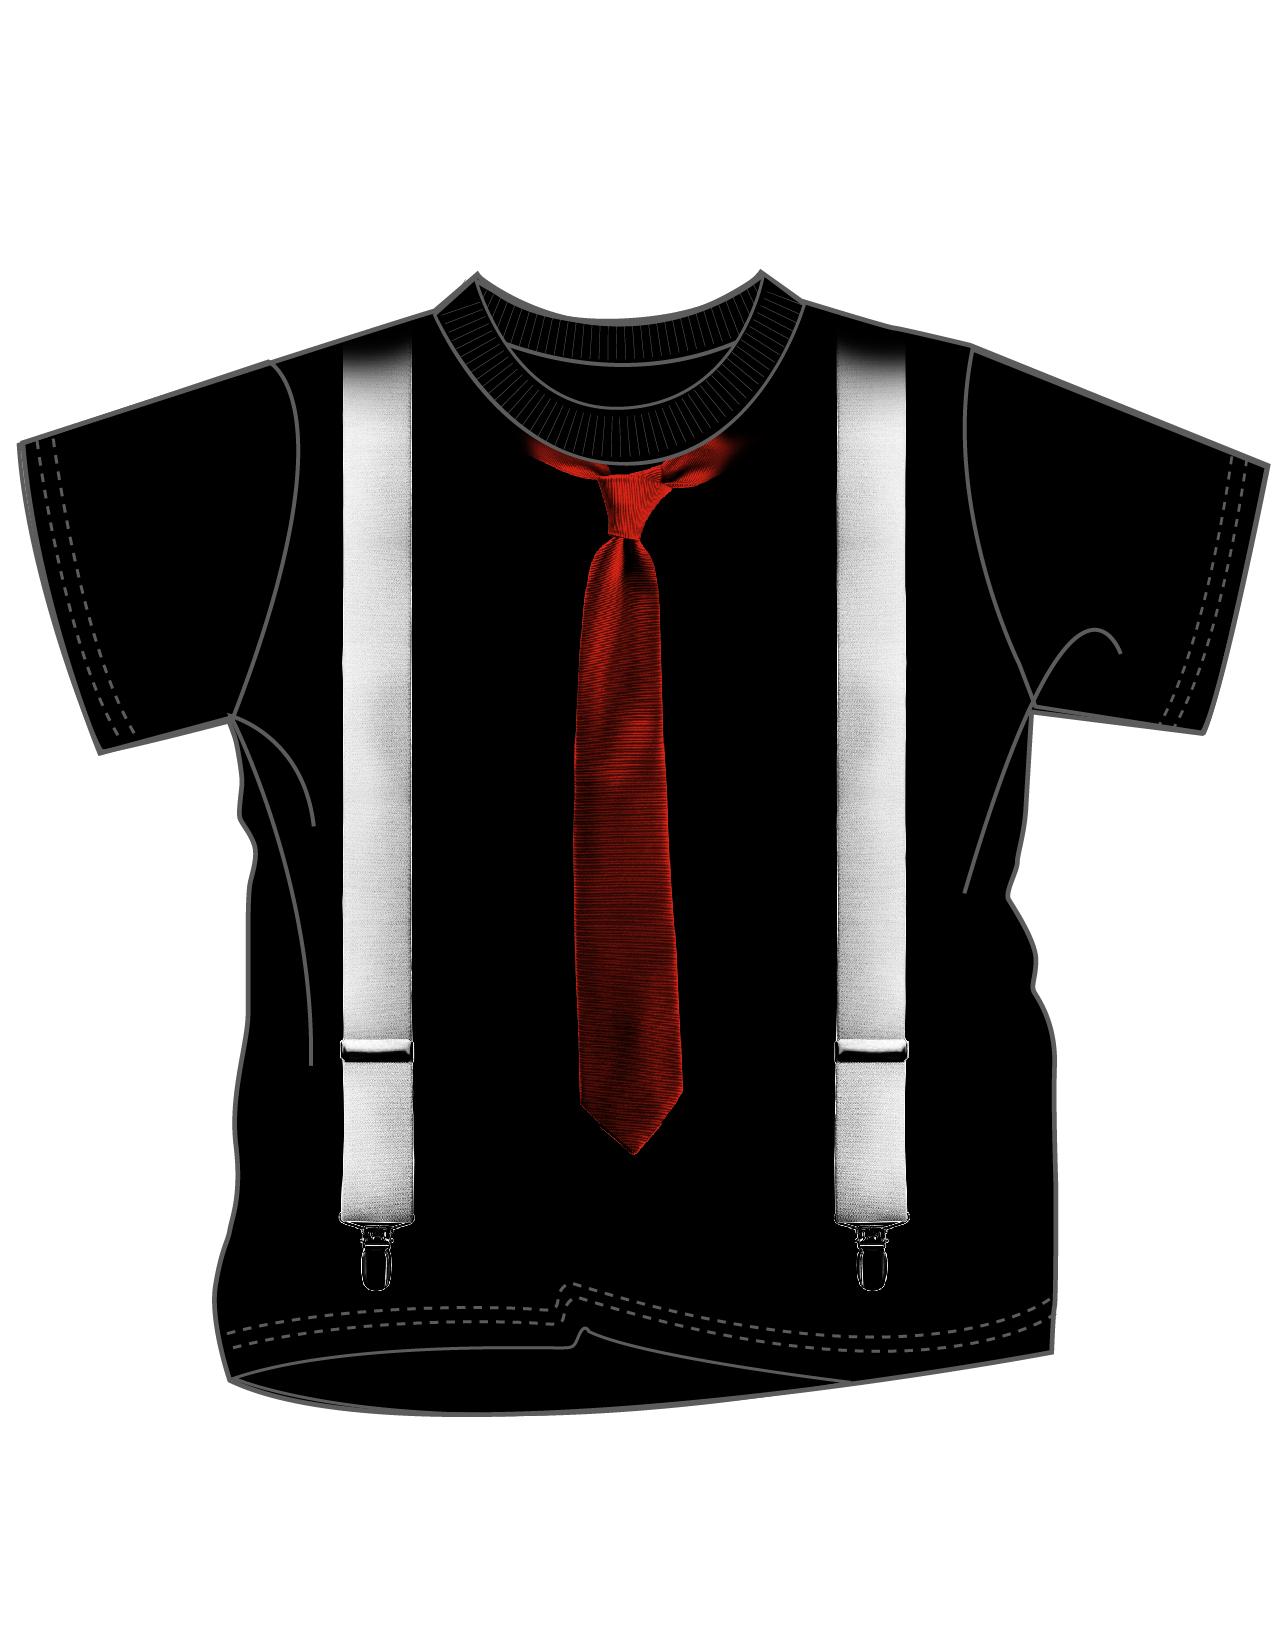 Route 66 Boy's Graphic T-Shirt - Tie & Suspenders